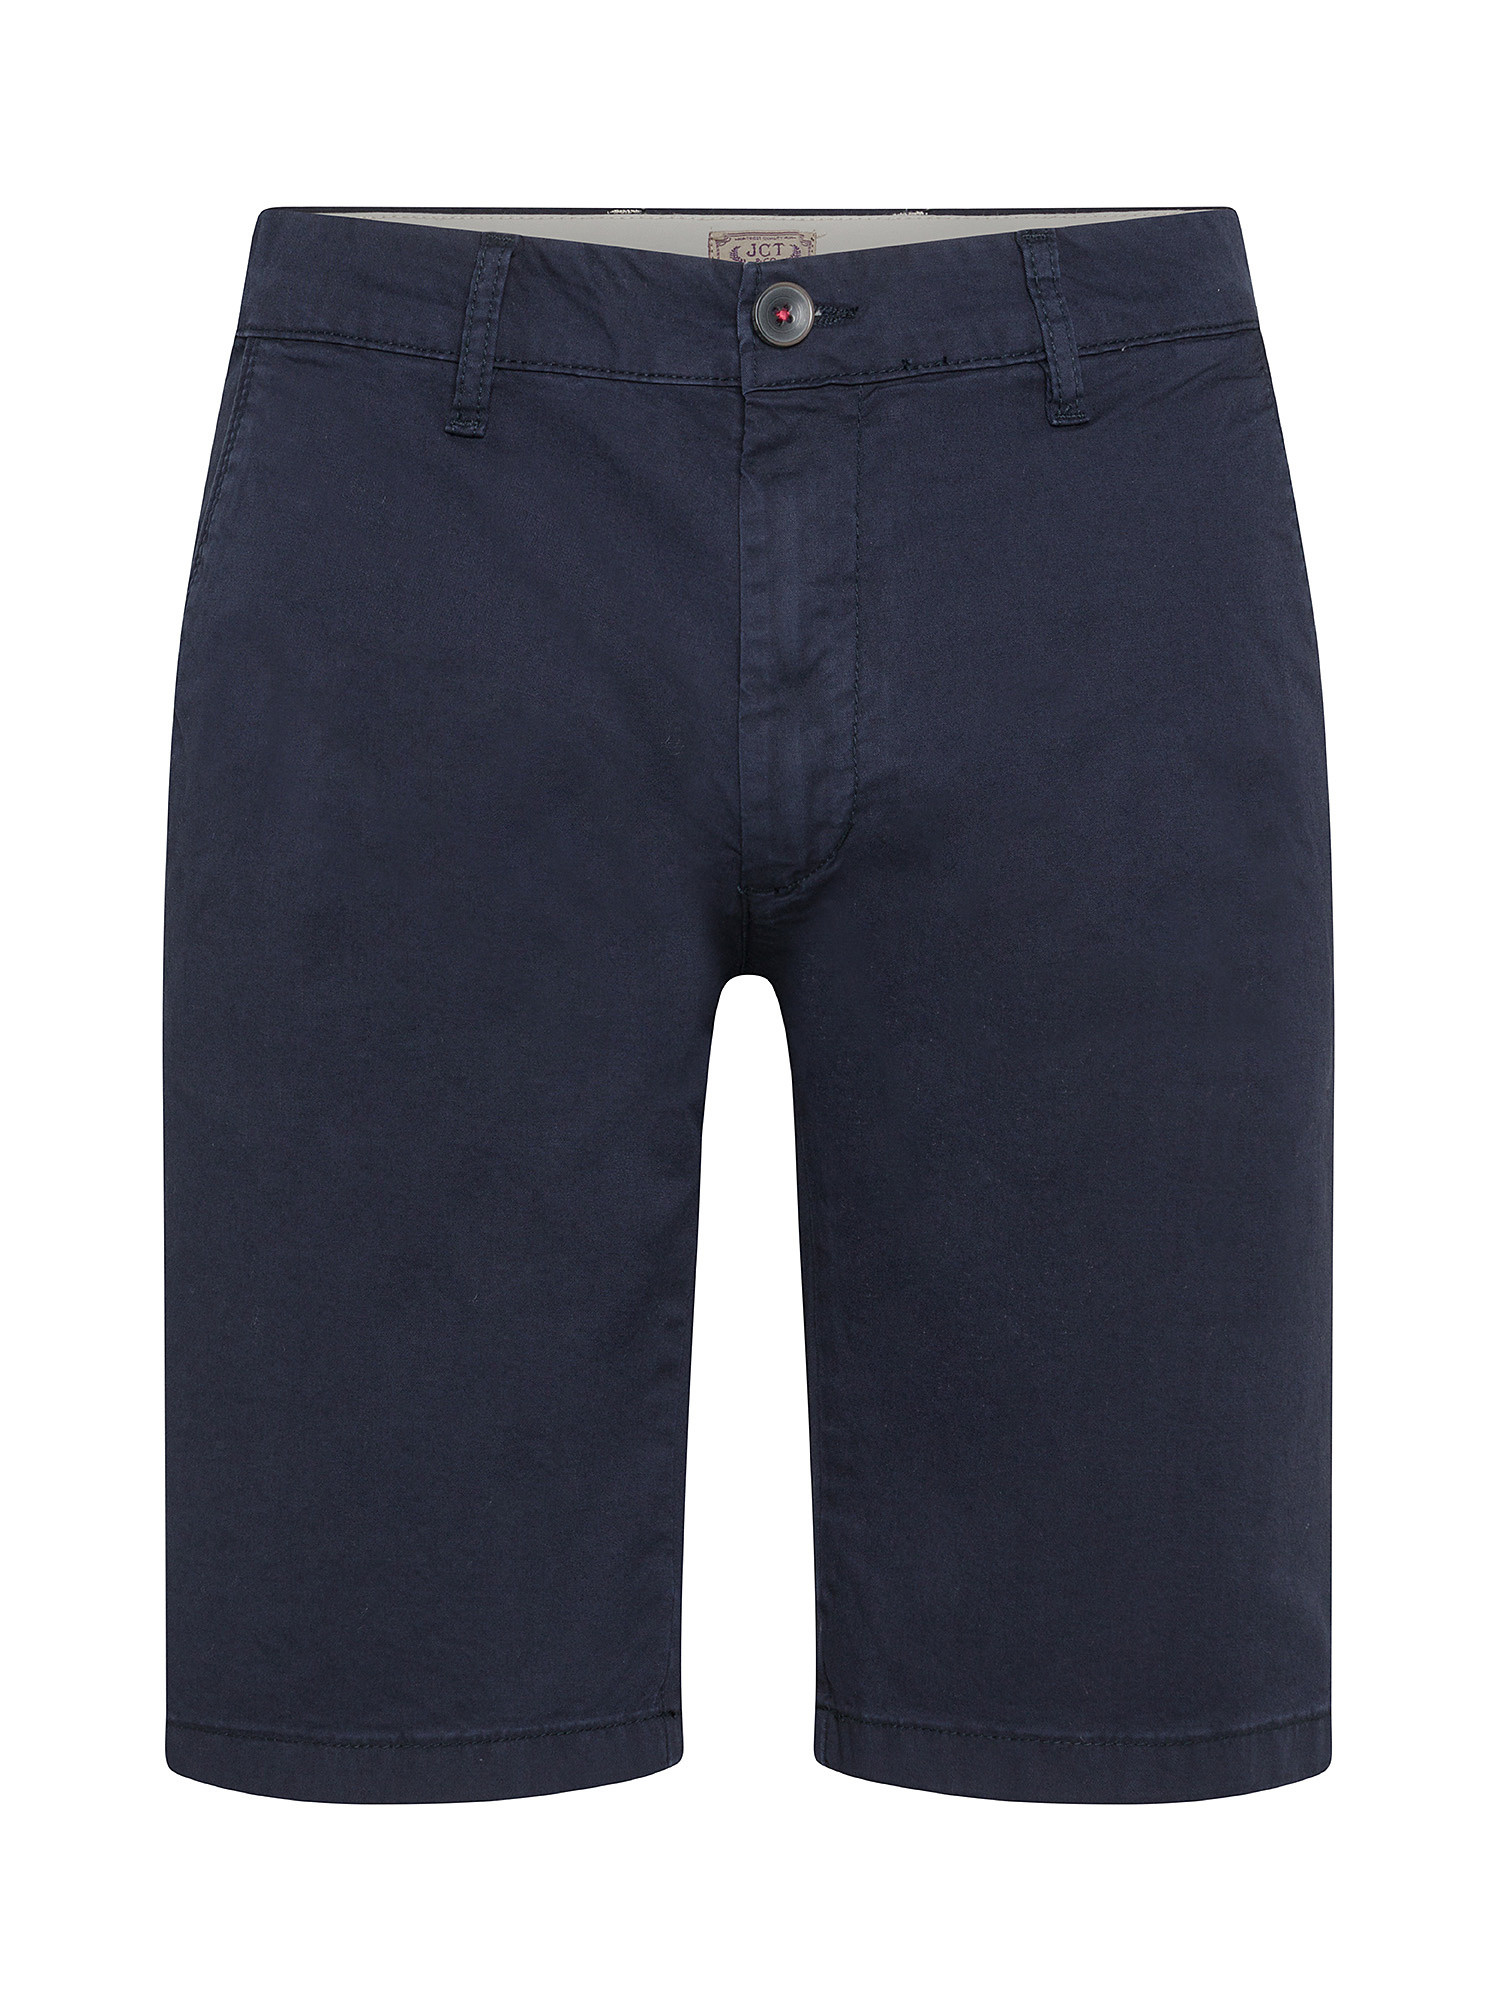 JCT - Bermuda shorts in stretch cotton, Dark Blue, large image number 0